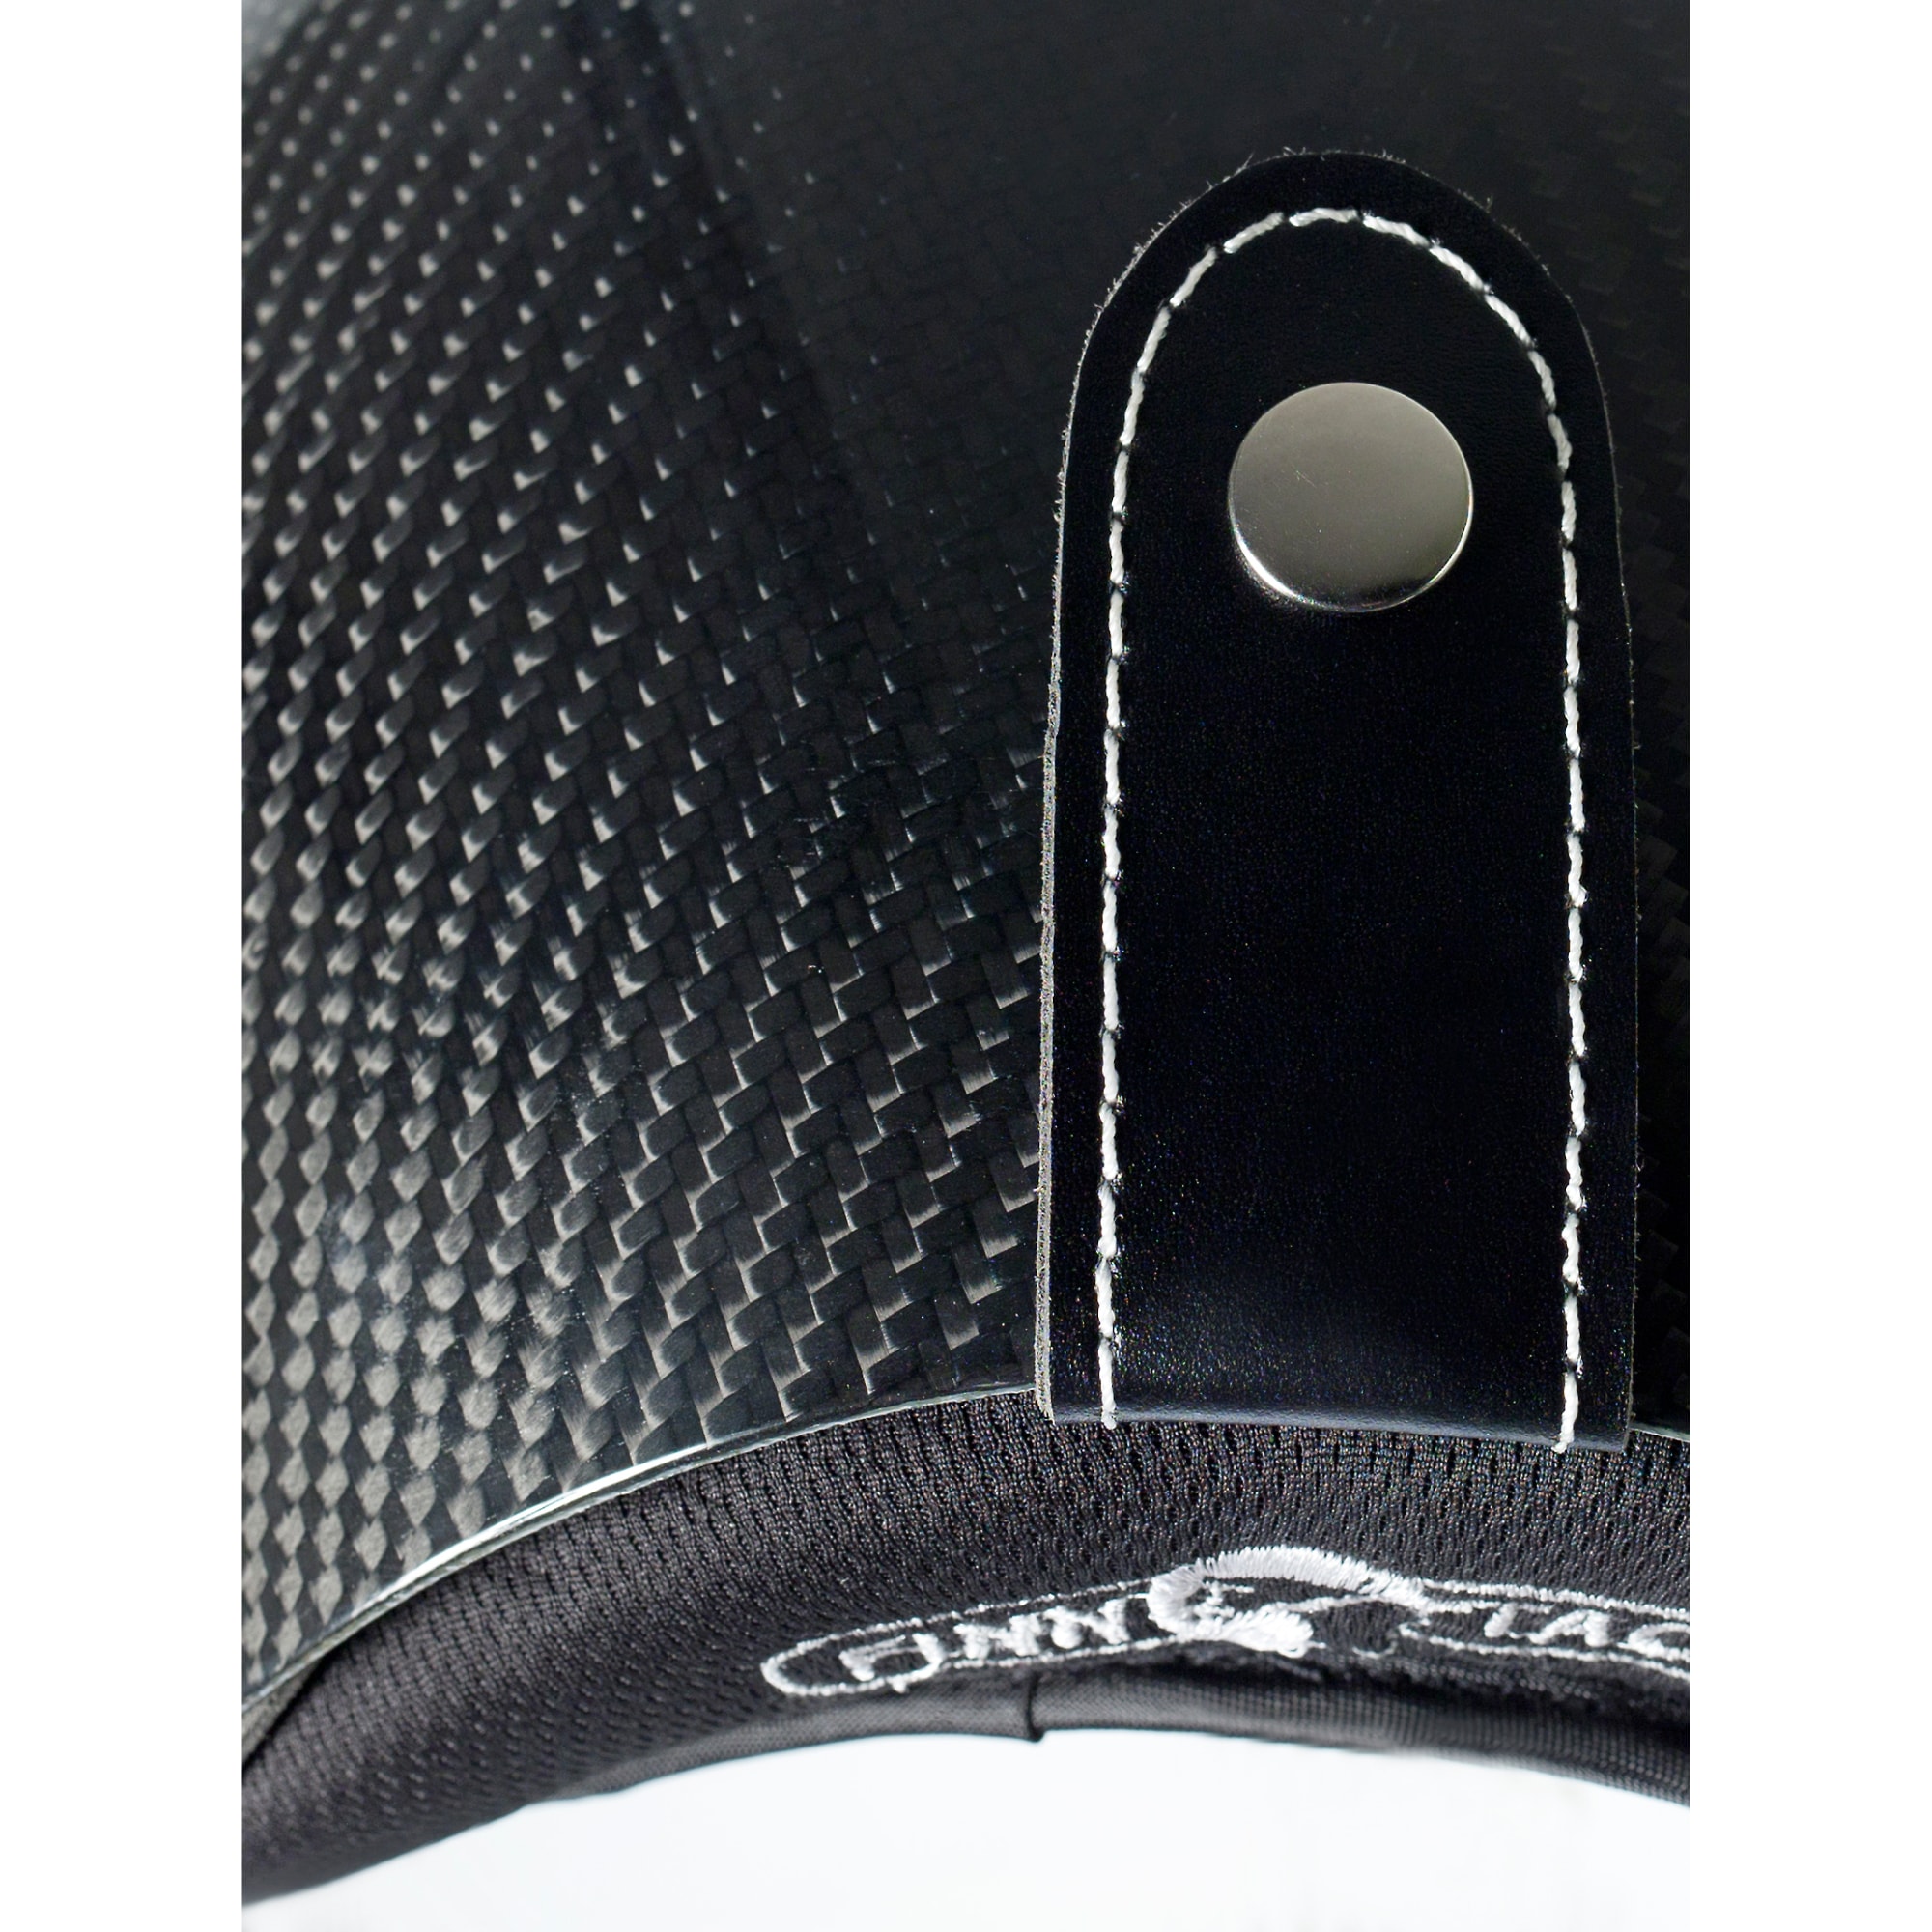 Finntack Elite Carbon Fiber Helmet